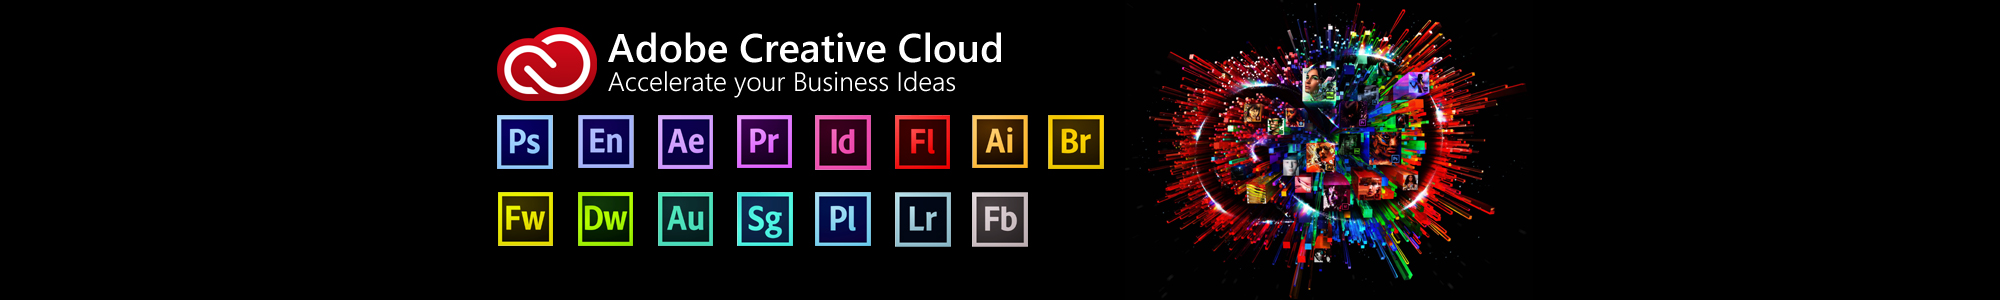 Adobe Creative Cloud 5.6.5.58